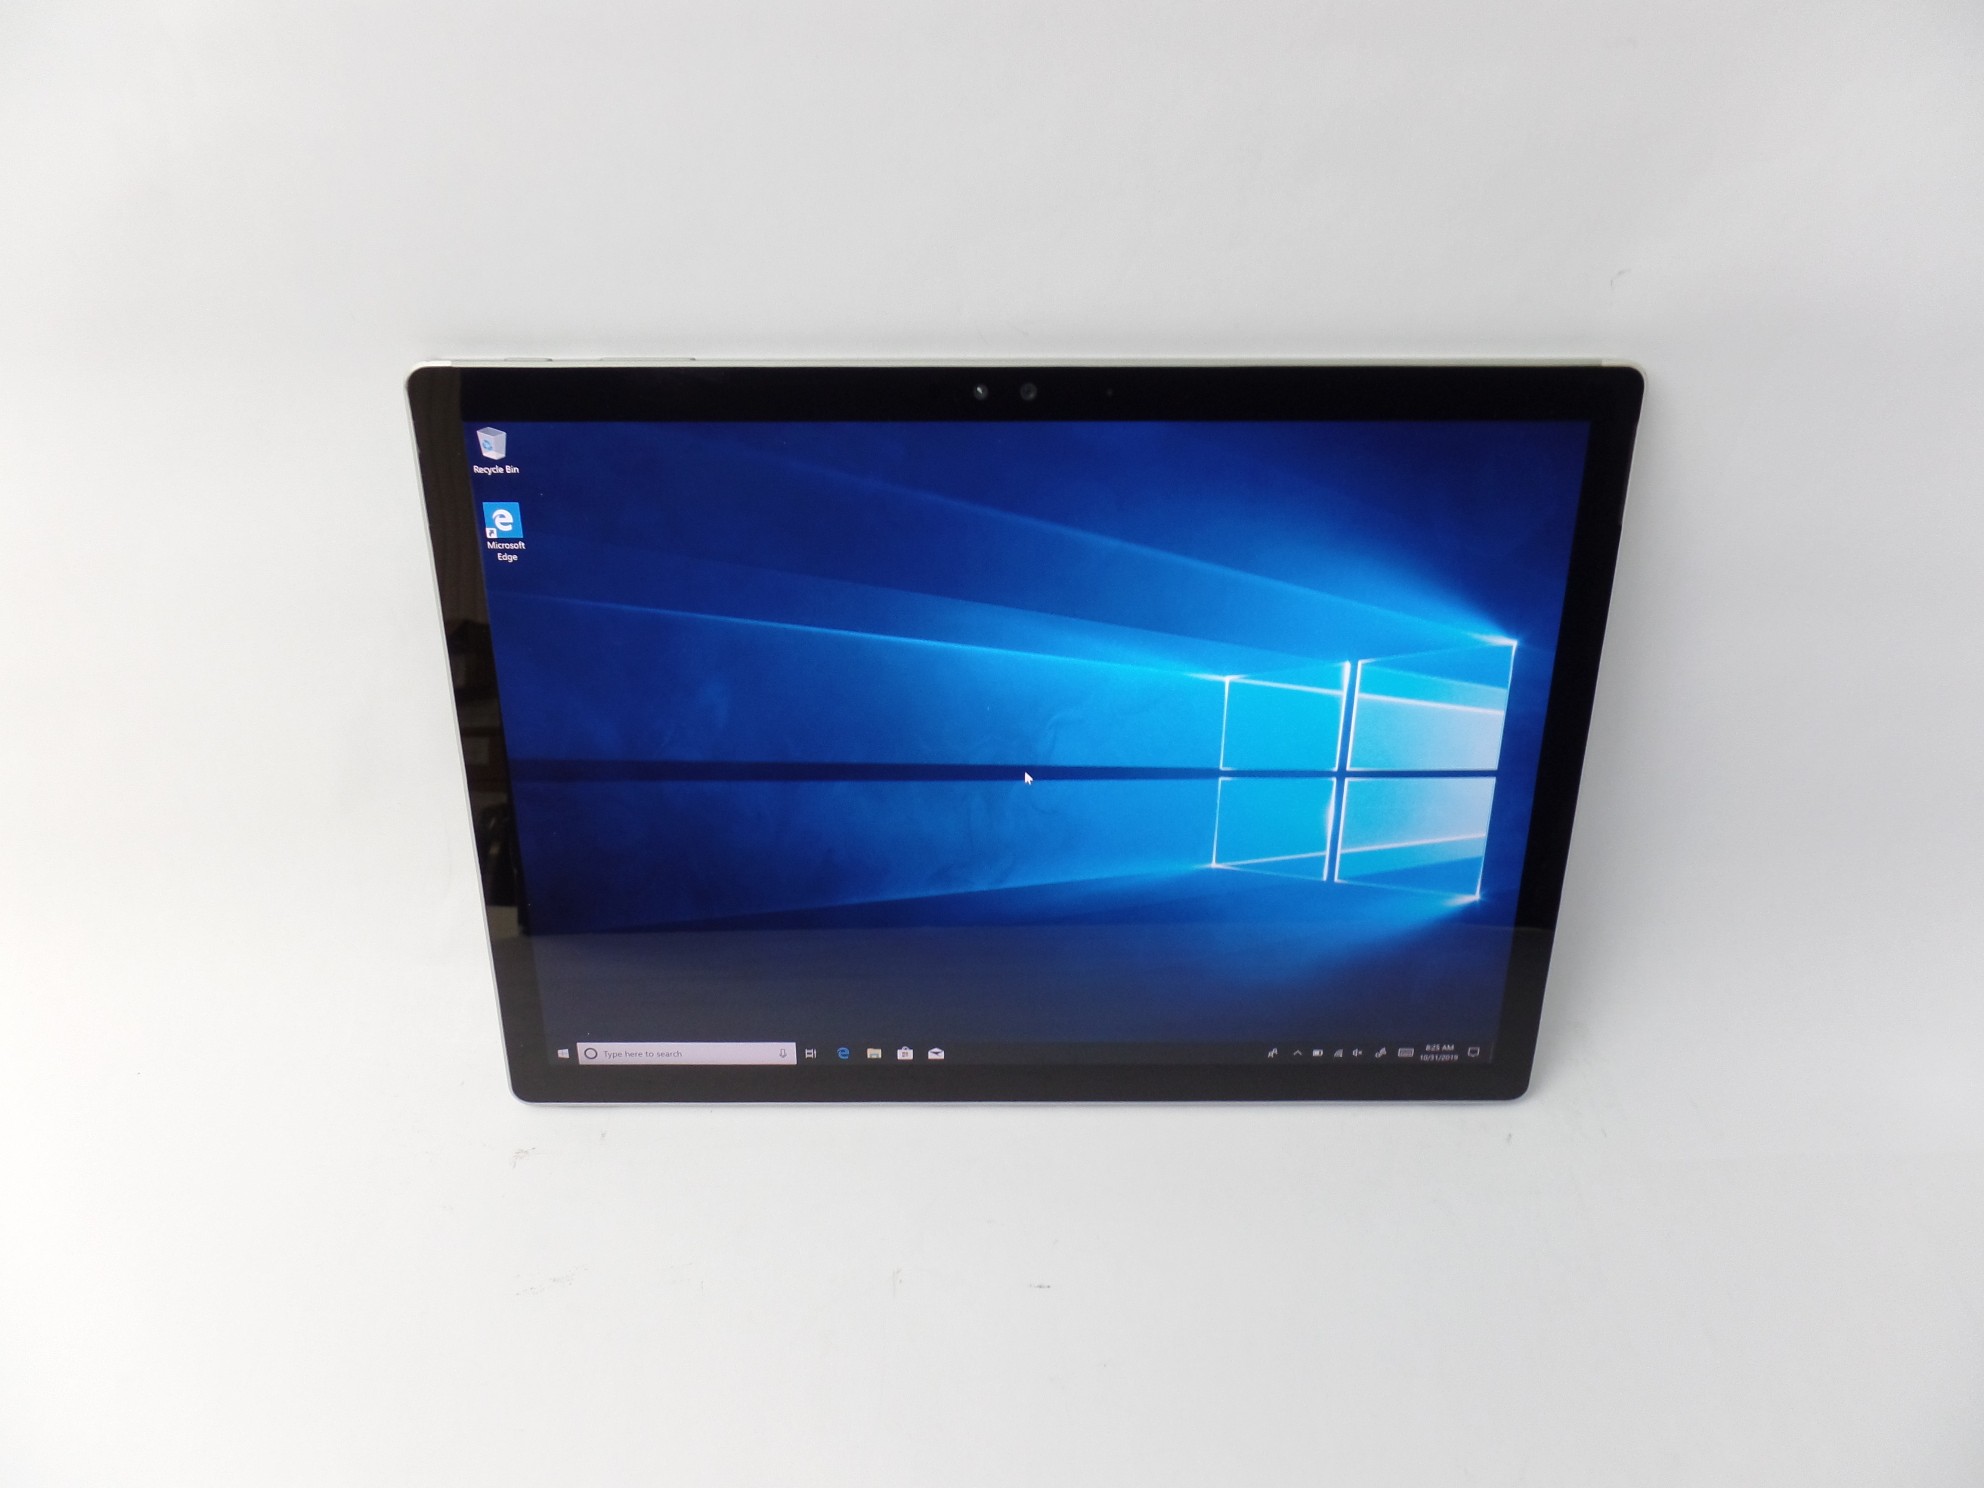 Microsoft Surface Book 1703 13.5" i7-6600U 8GB 256GB W10P - Bad Battery